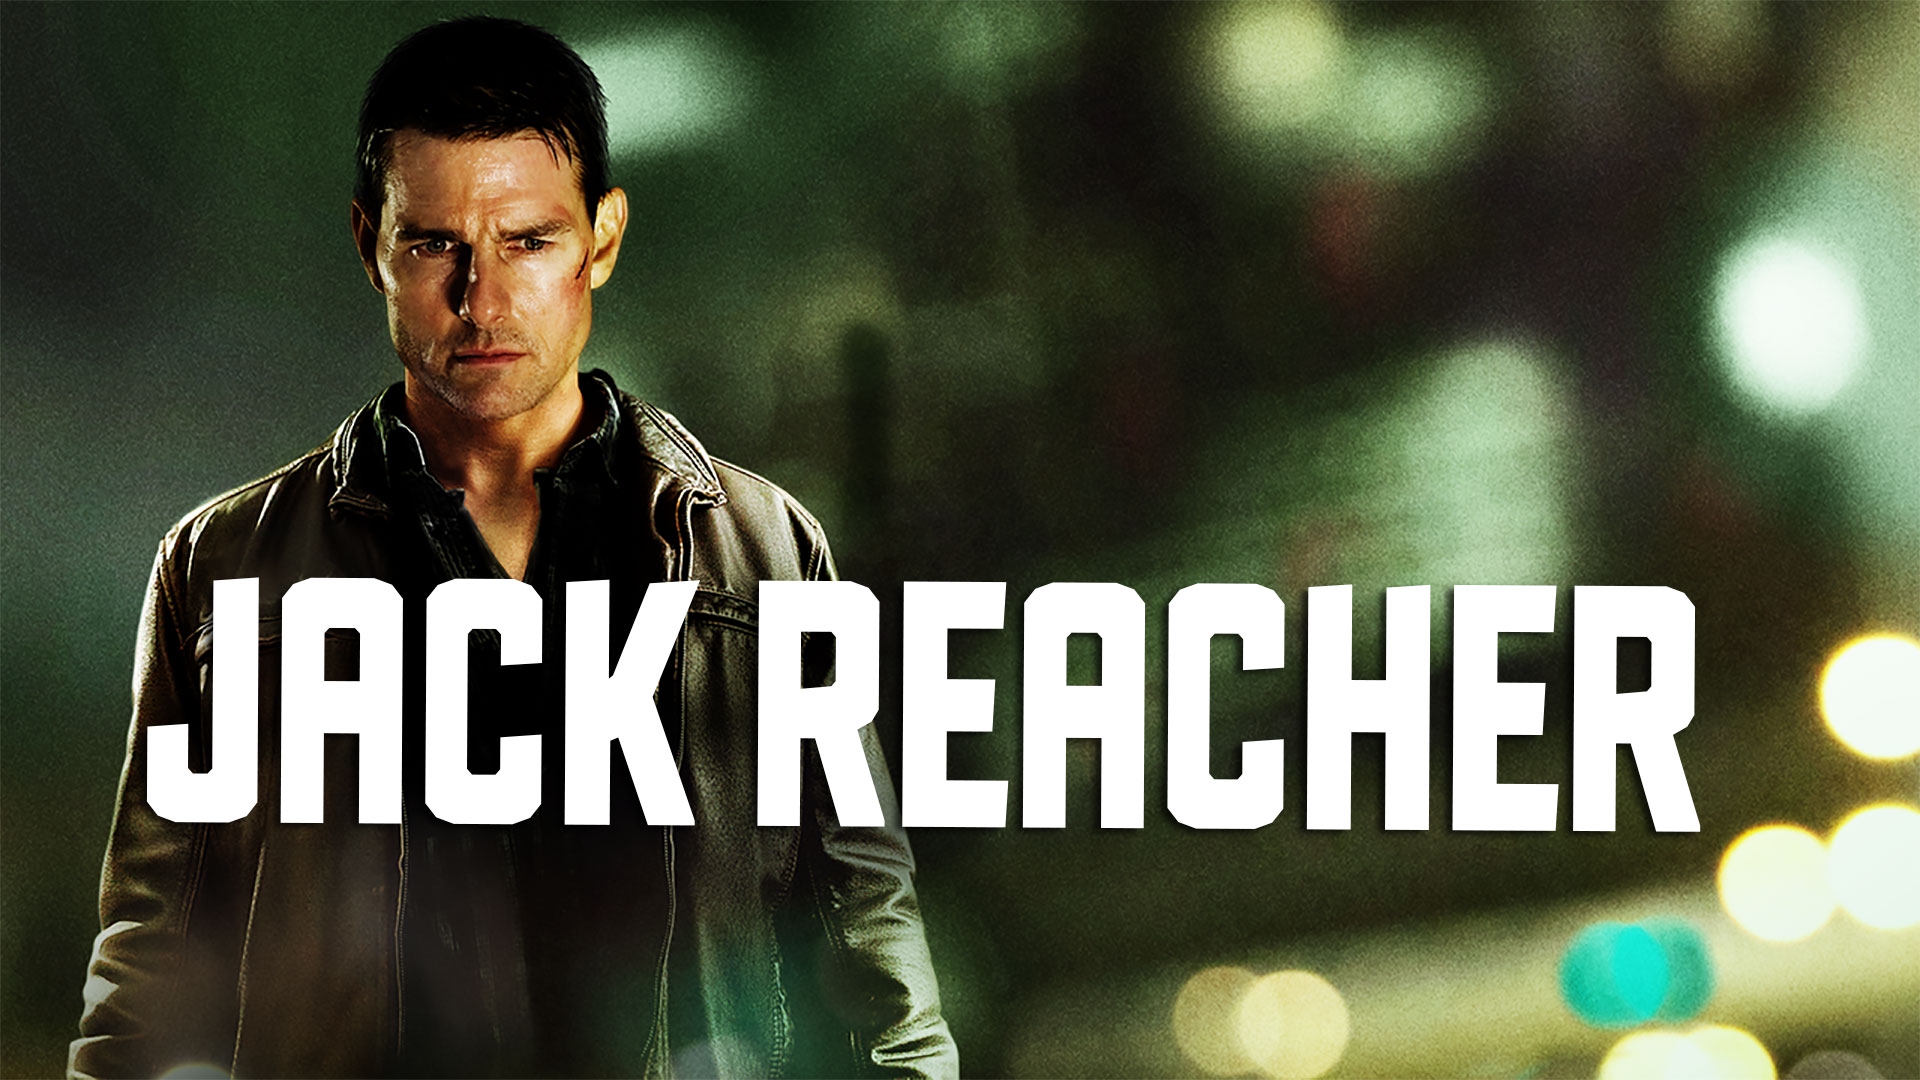 Stream Jack Reacher Online | Download and Watch HD Movies | Stan